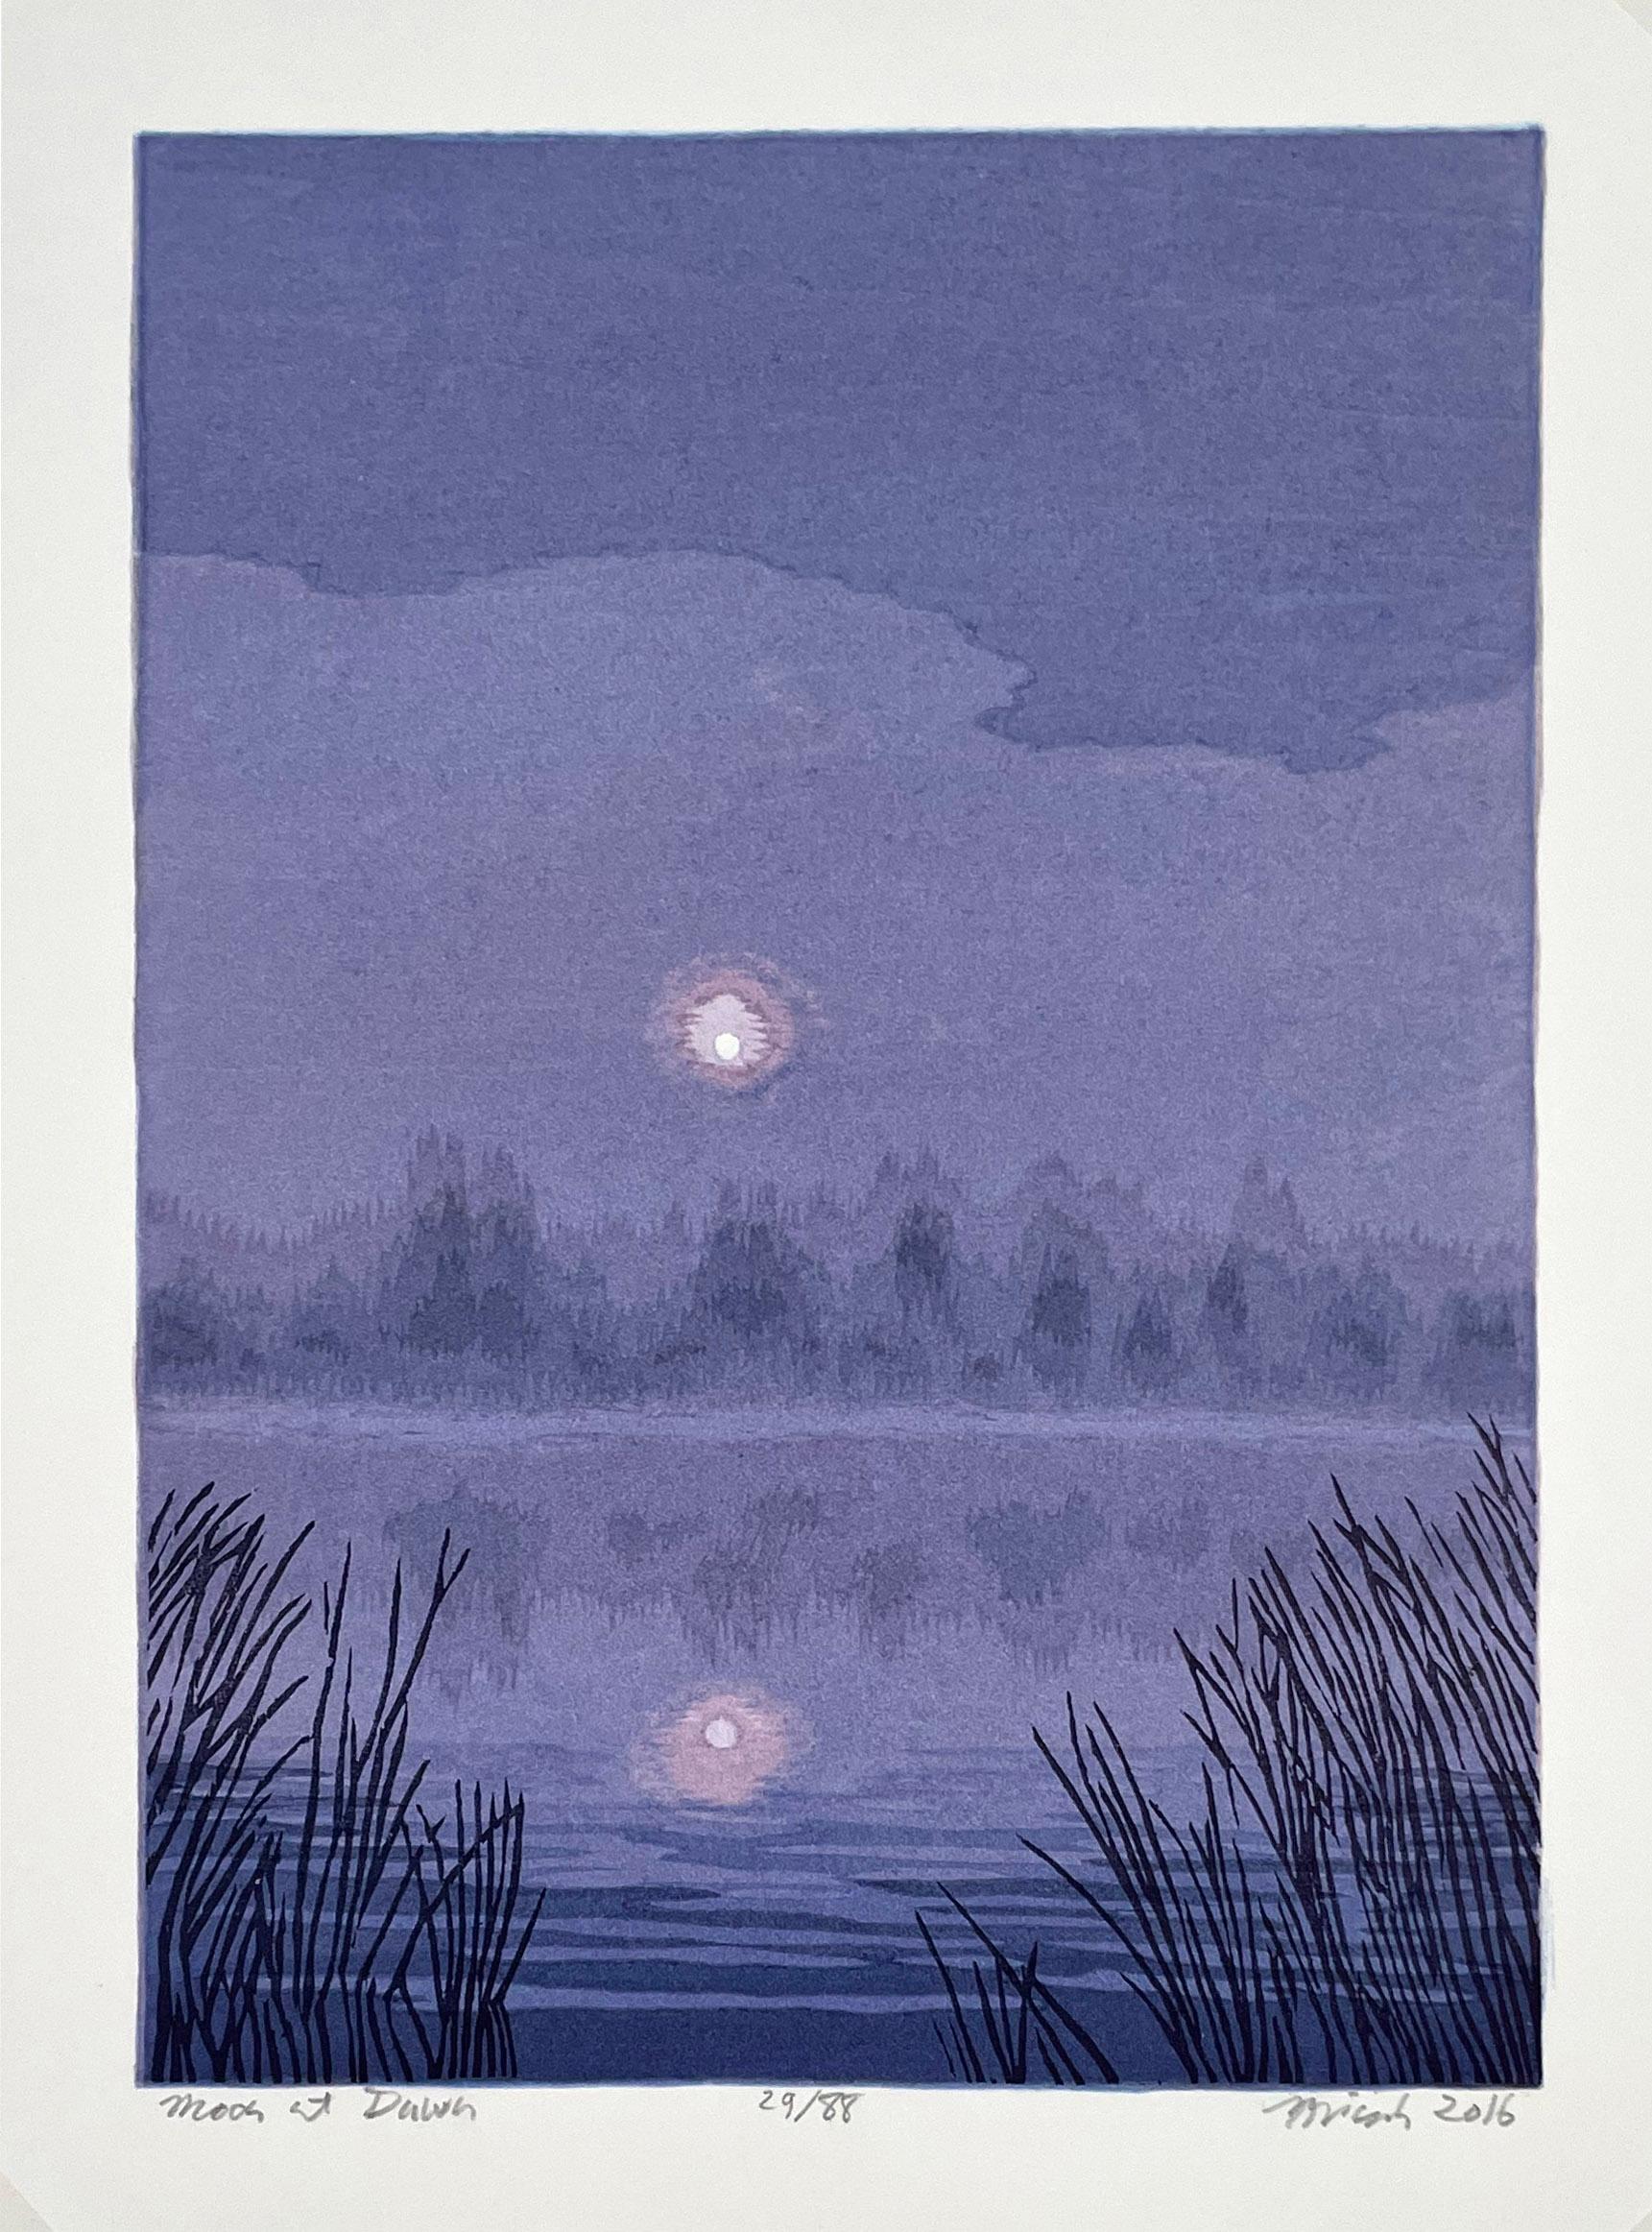 Moon At Dawn - Print by Micah Schwaberow